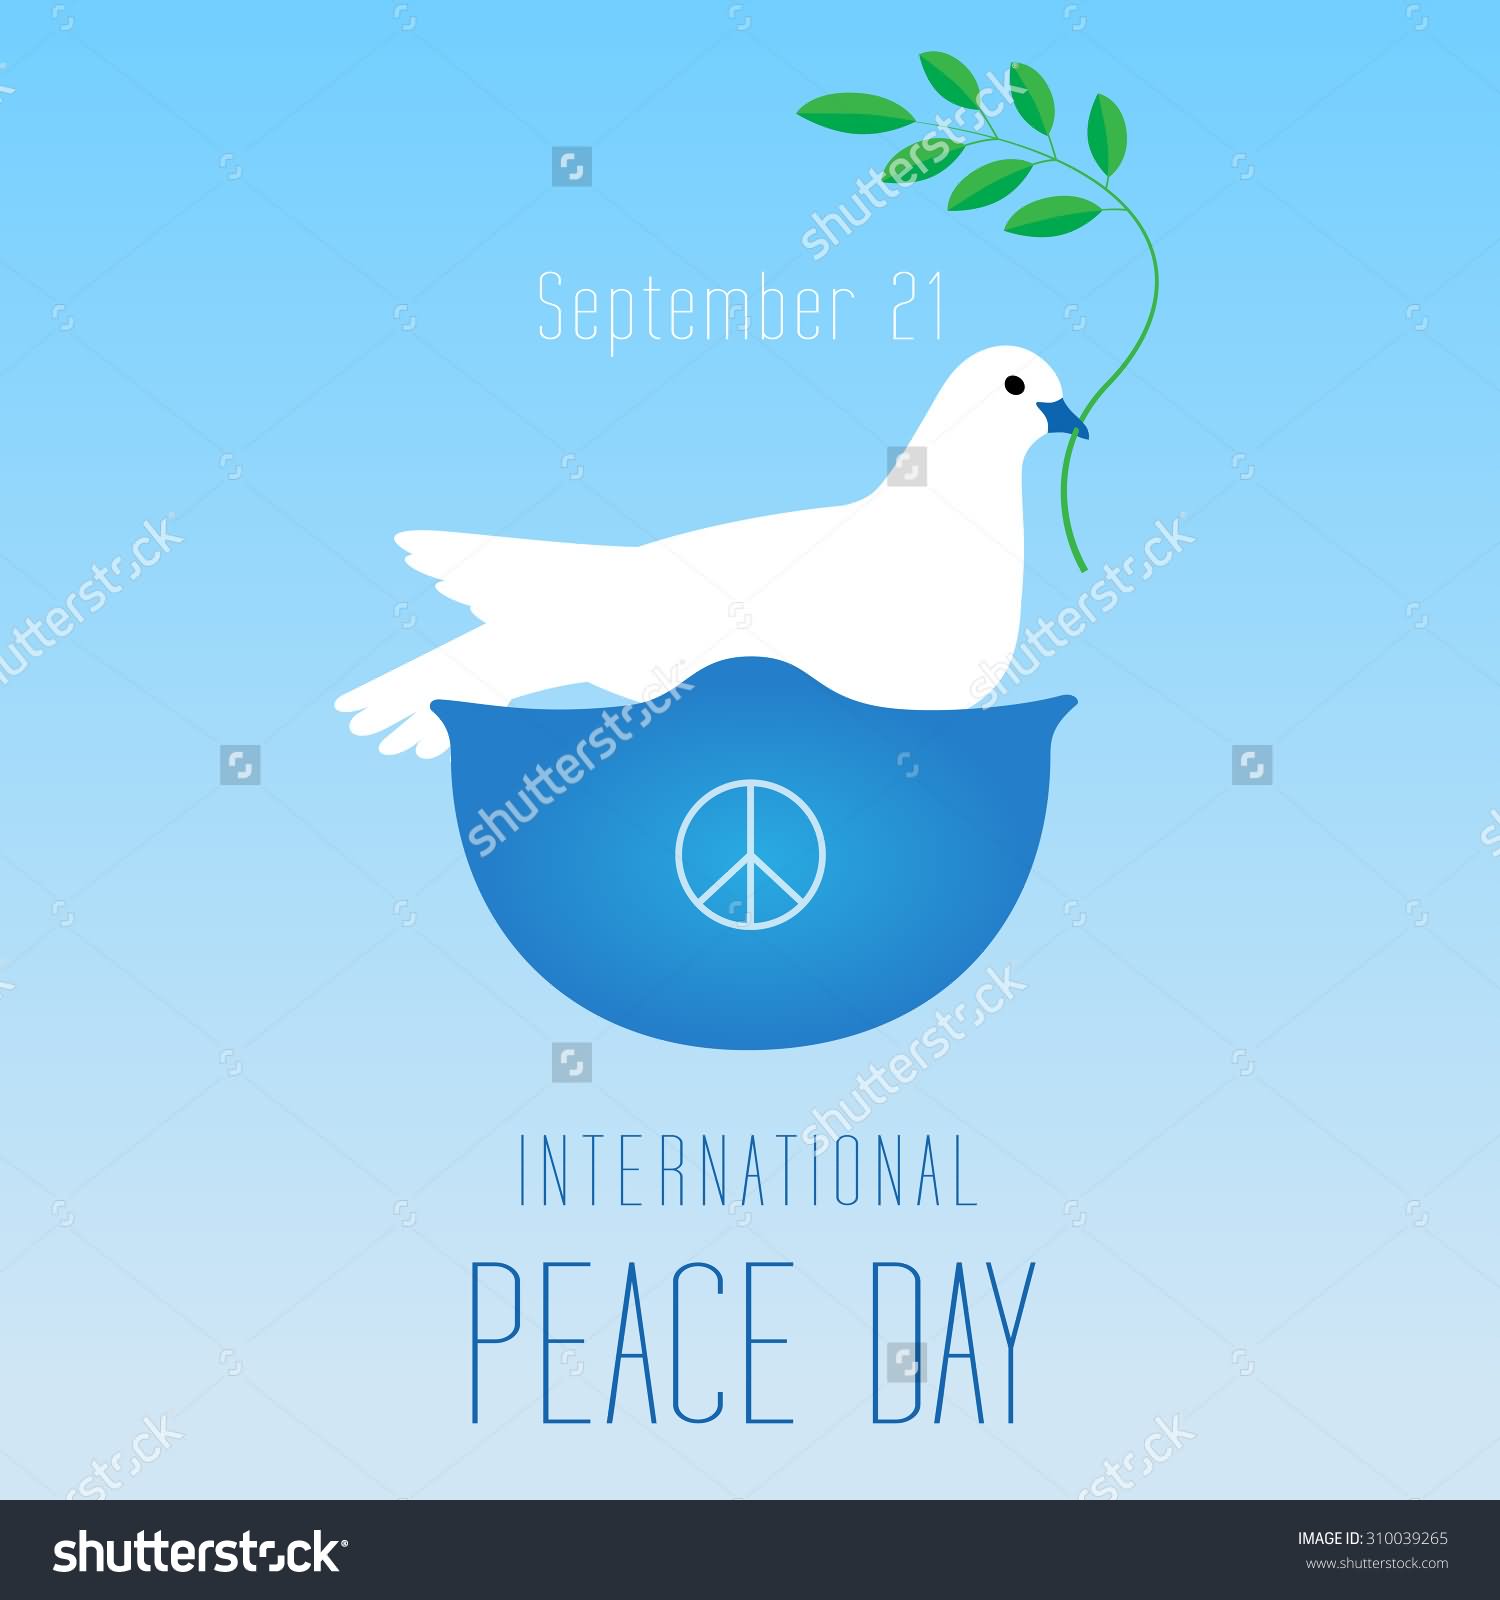 September 21 International Peace Day Poster Image